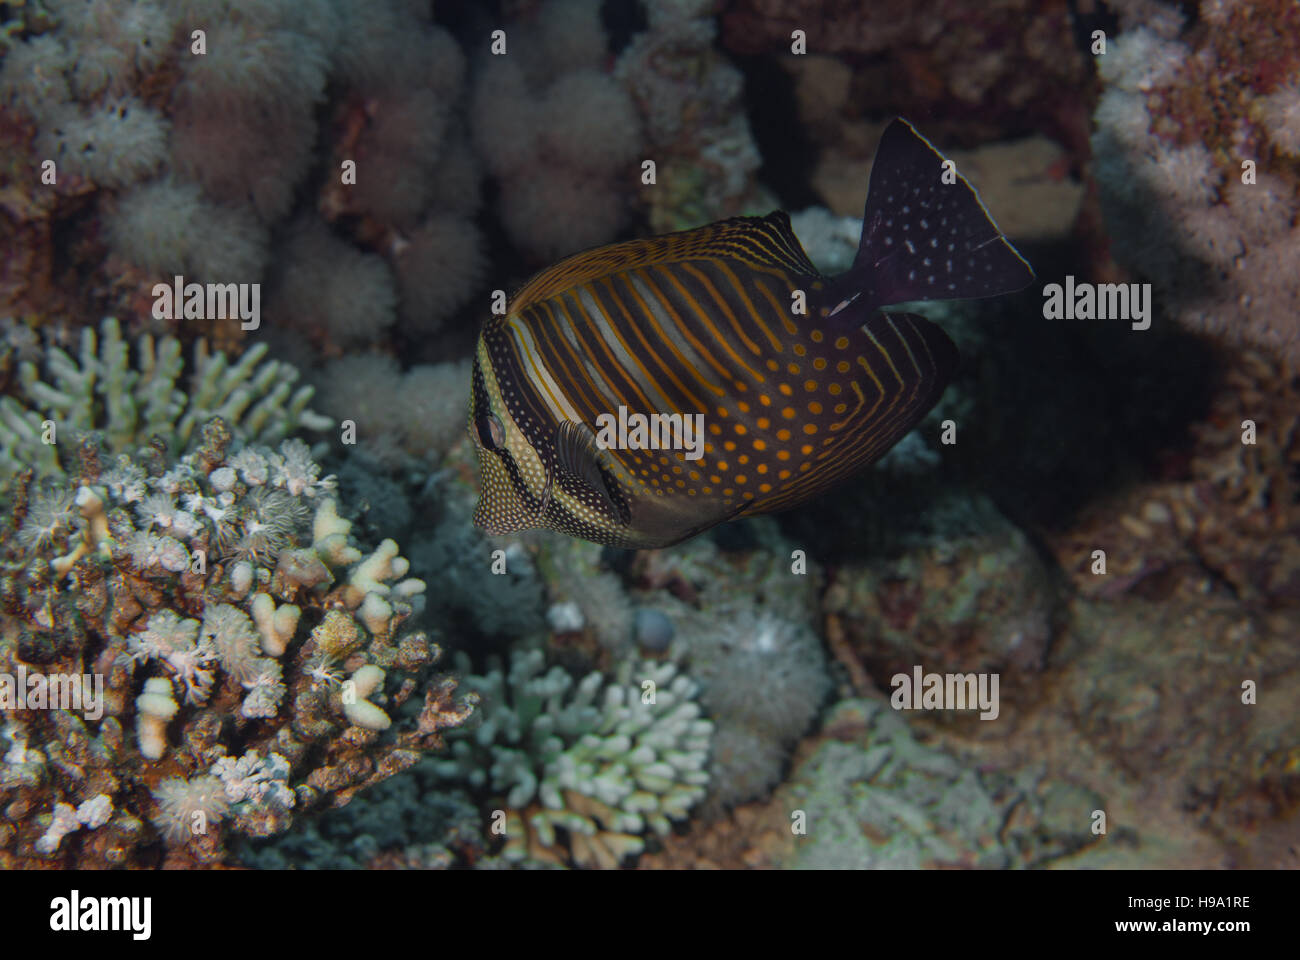 Red Sea sailfin tang or Desjardin's sailfin tang (Zebrasoma desjardinii), Acanthuridae, Sharm el Sheikh, Red Sea, Egypt Stock Photo